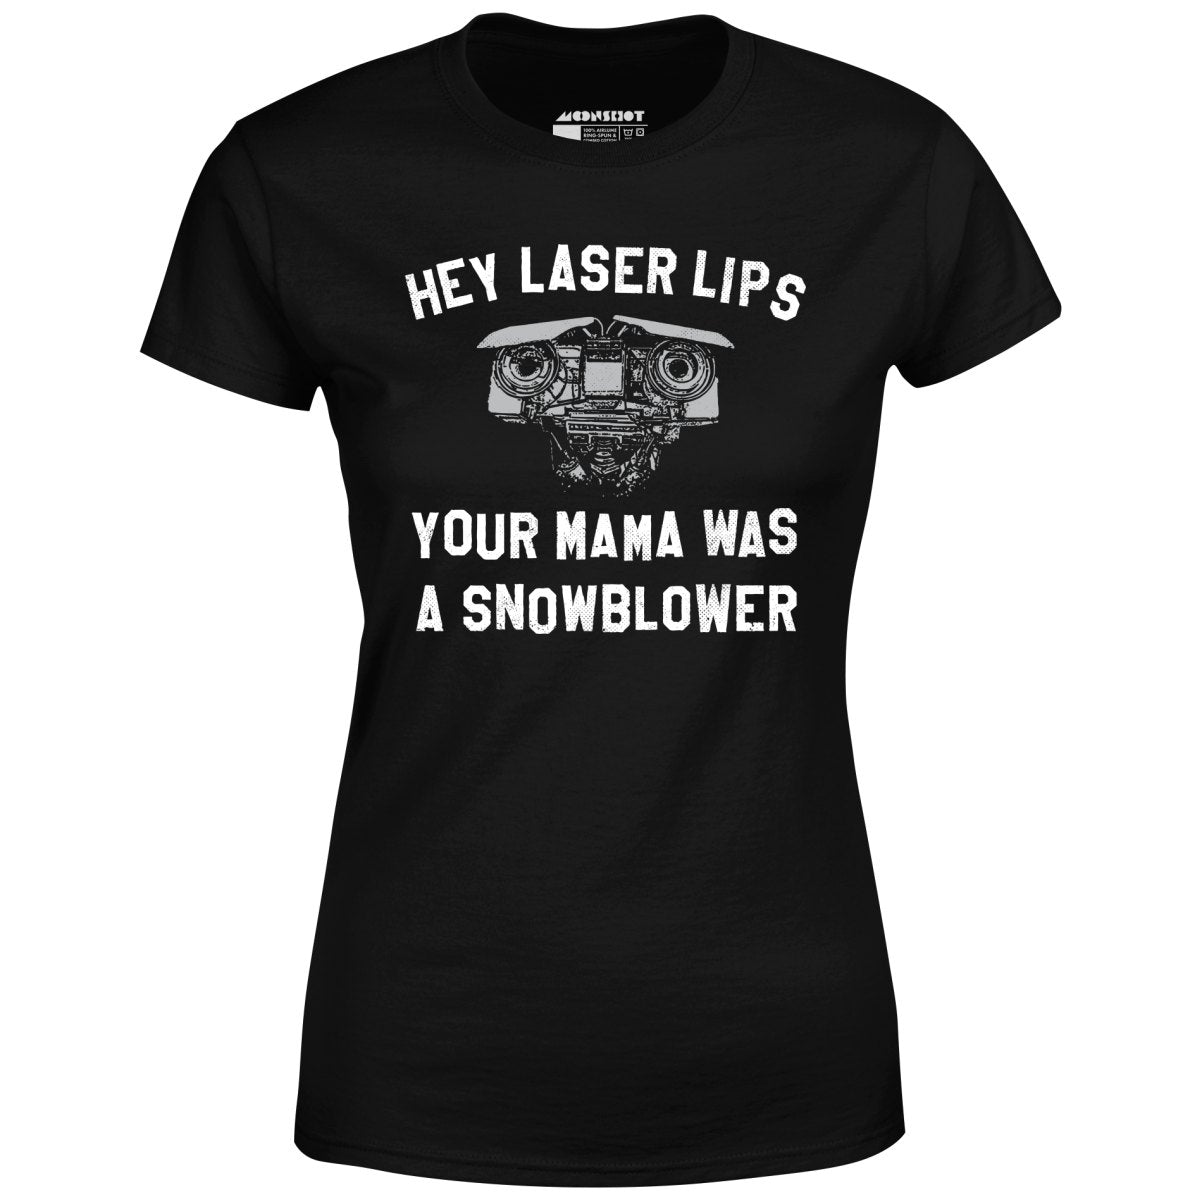 Hey Laser Lips - Women's T-Shirt